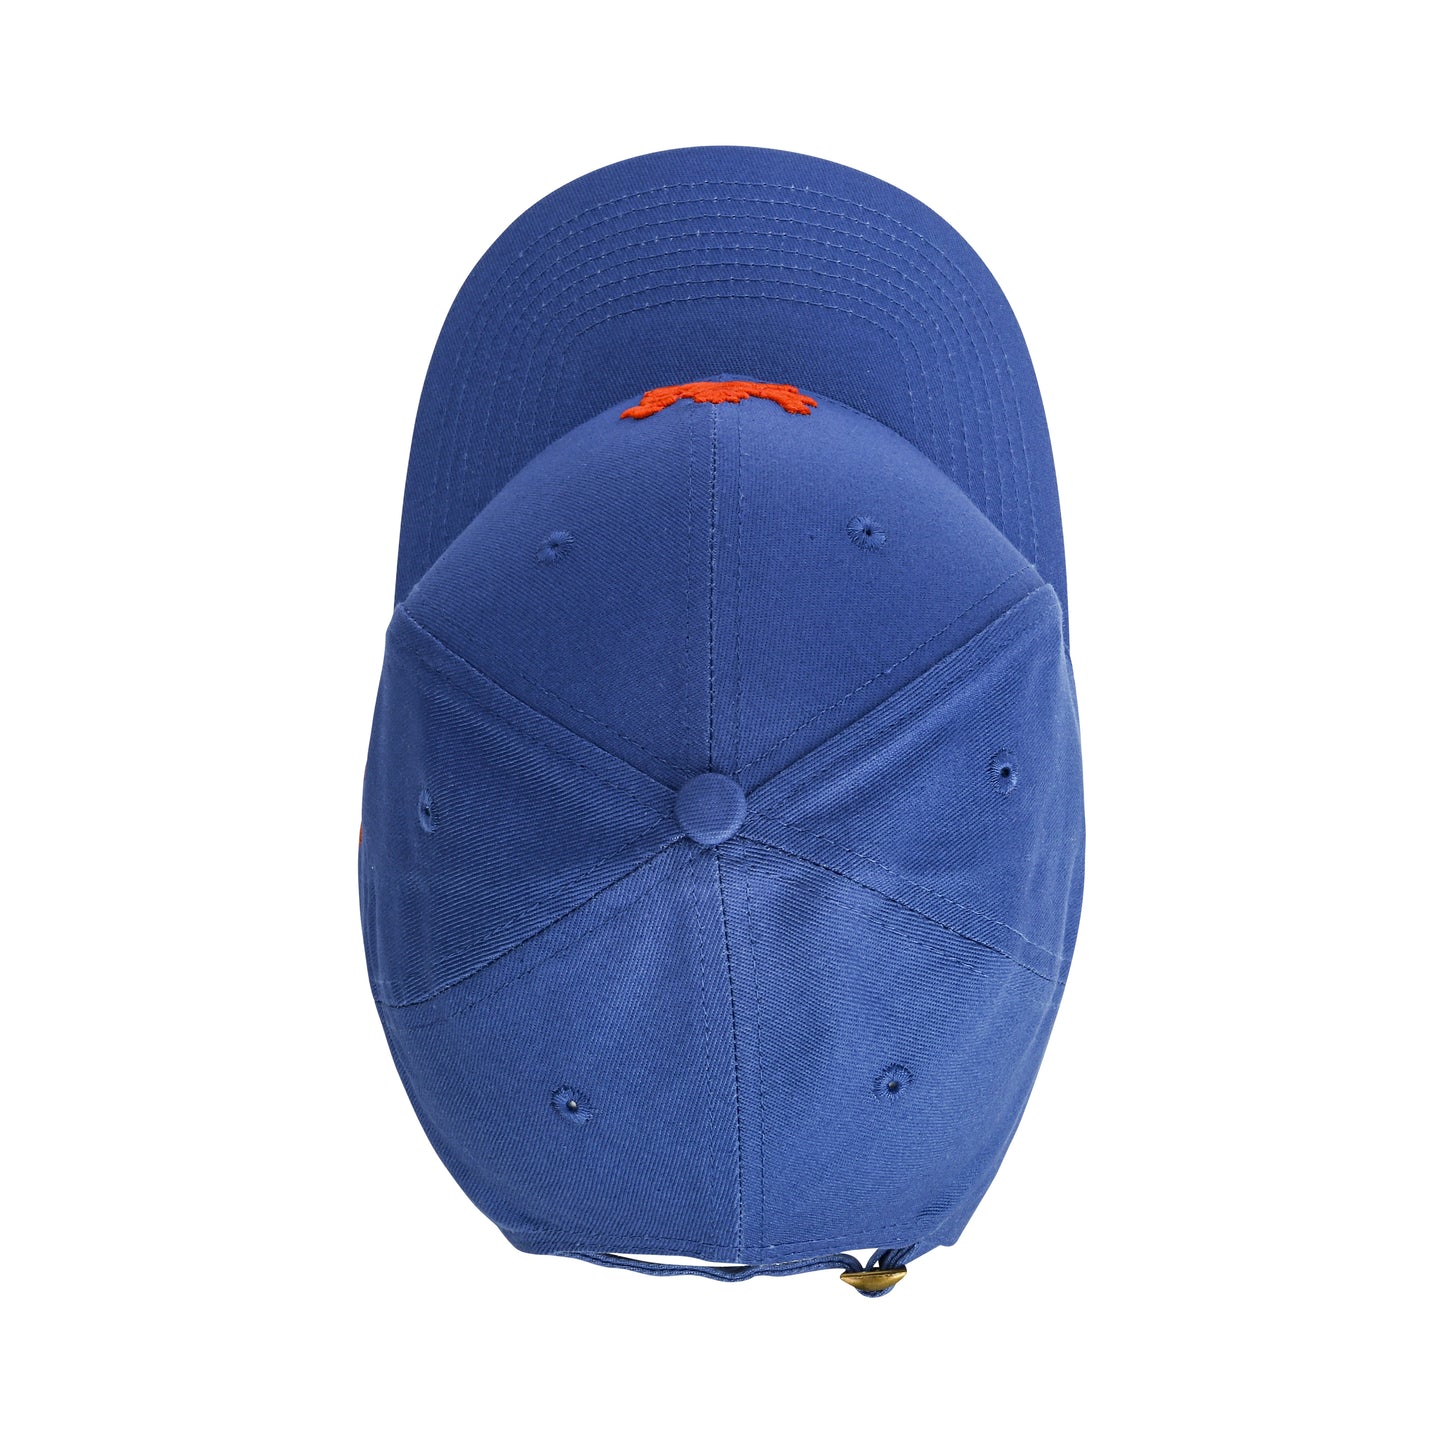 COMBIDEAL O.Leo baseballcap Blauw met Oranje & MyTech Earbuds